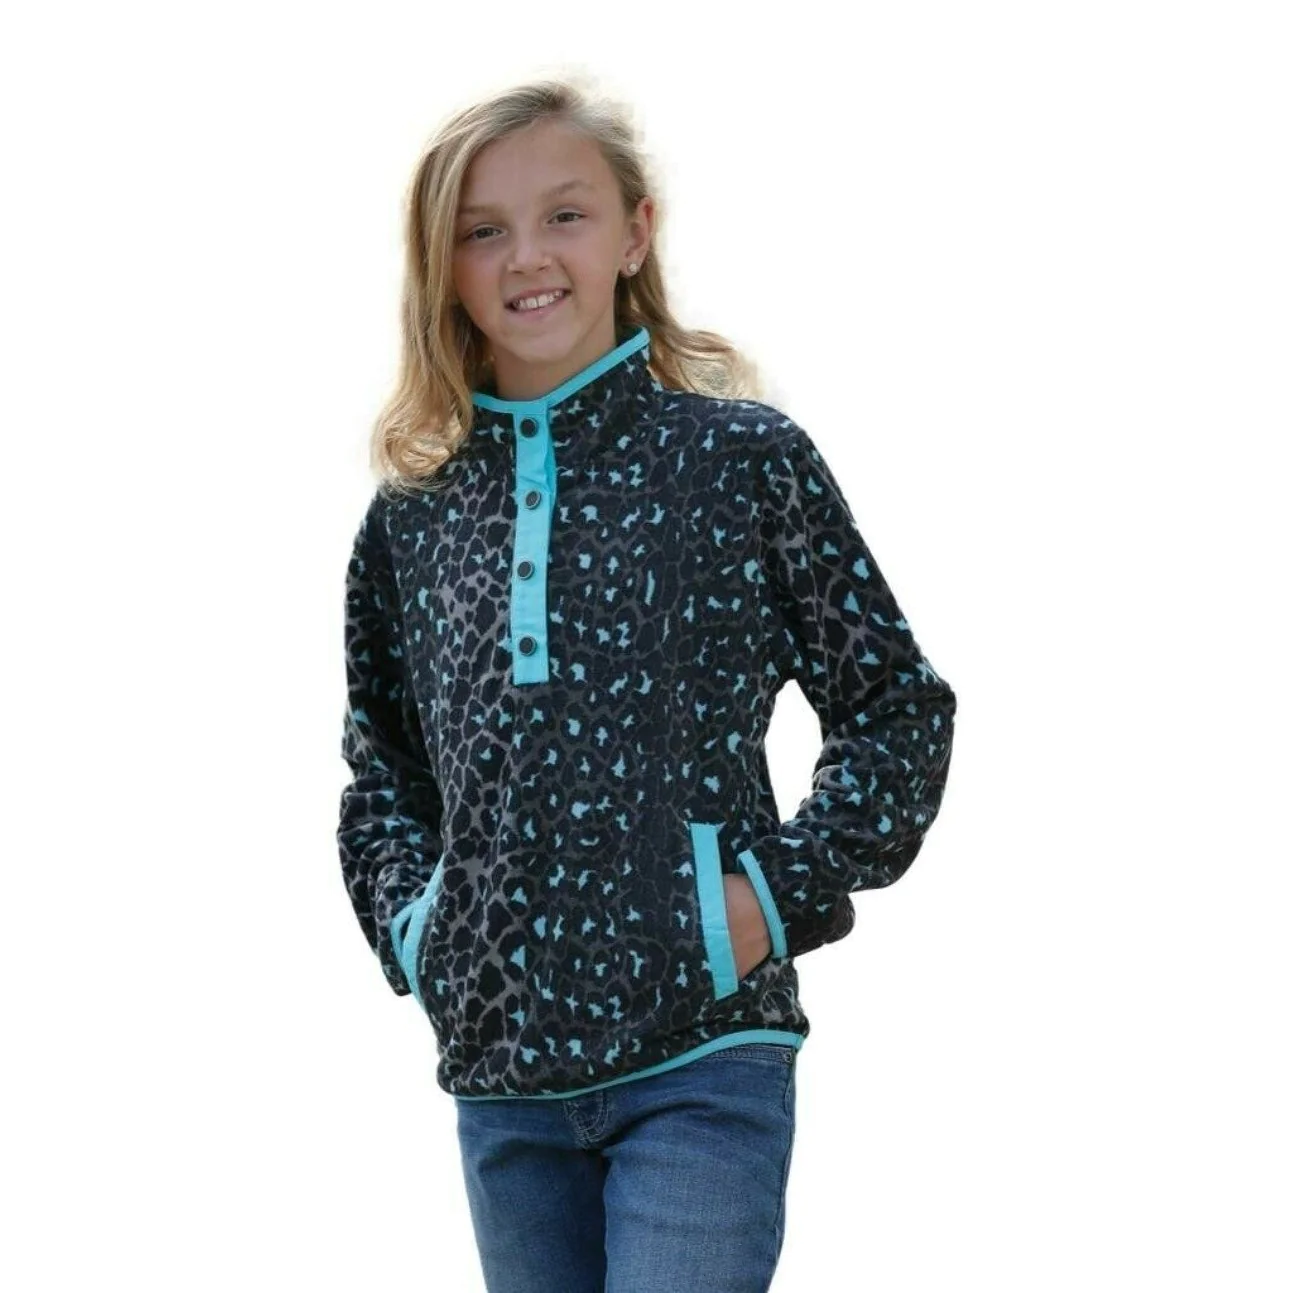 Cinch Girls Black/Blue Leopard Print Fleece with Snaps